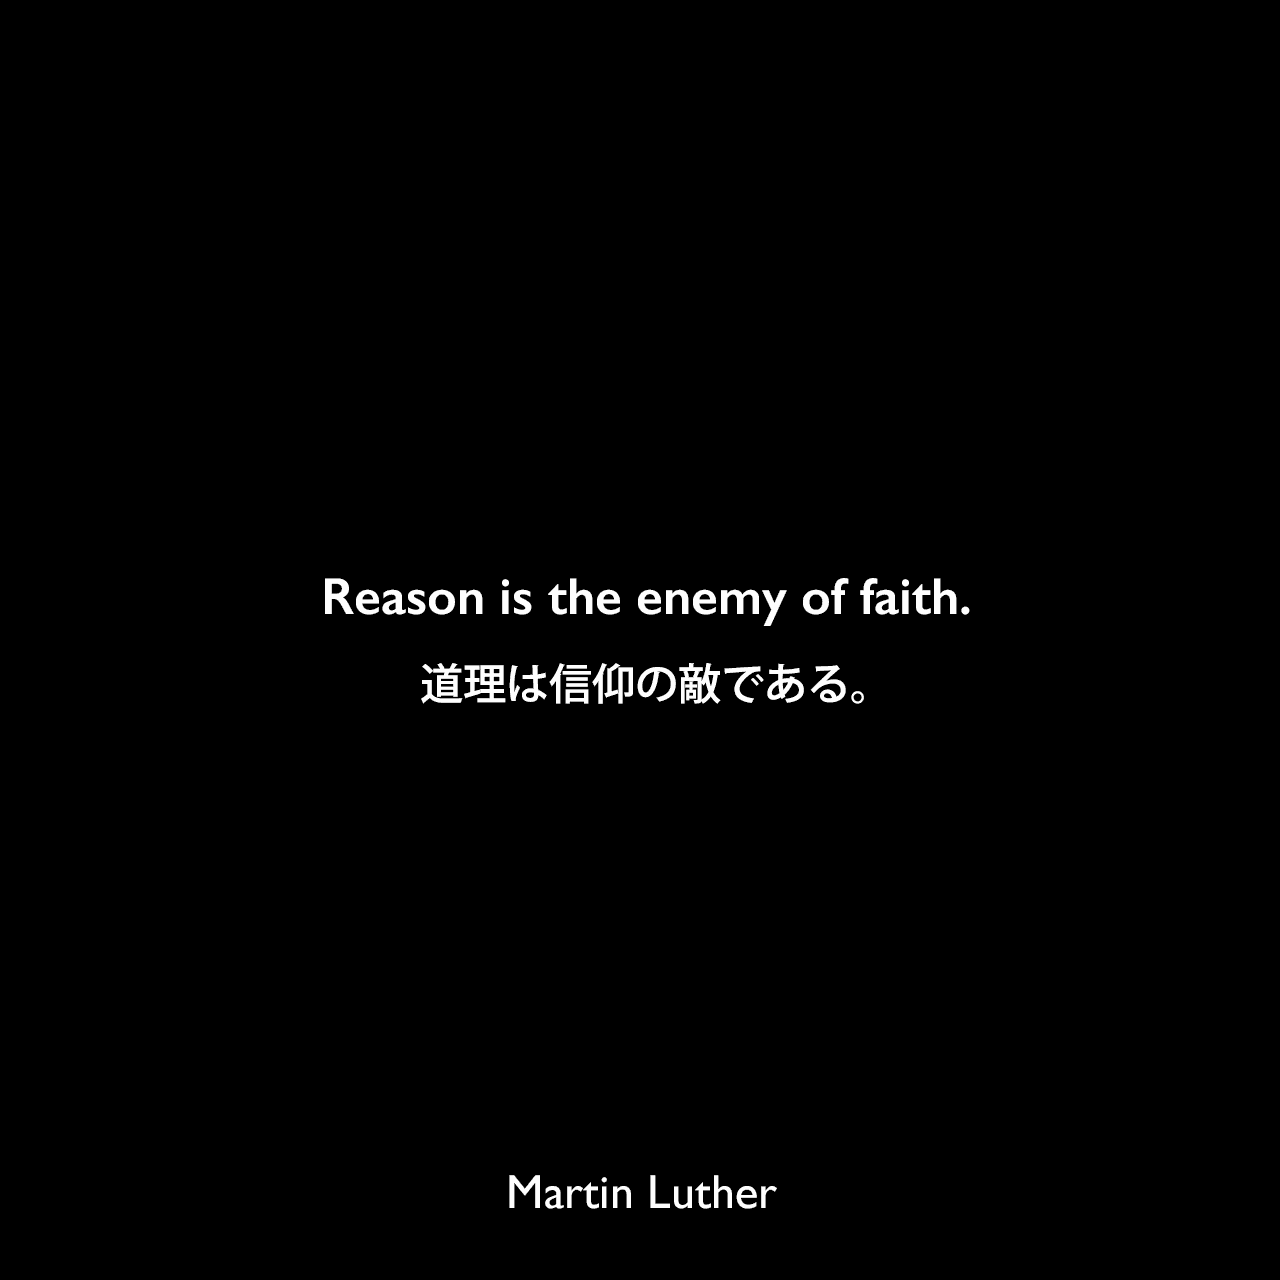 Reason is the enemy of faith.道理は信仰の敵である。- マルティン・ルターによる本「Table Talk」よりMartin Luther